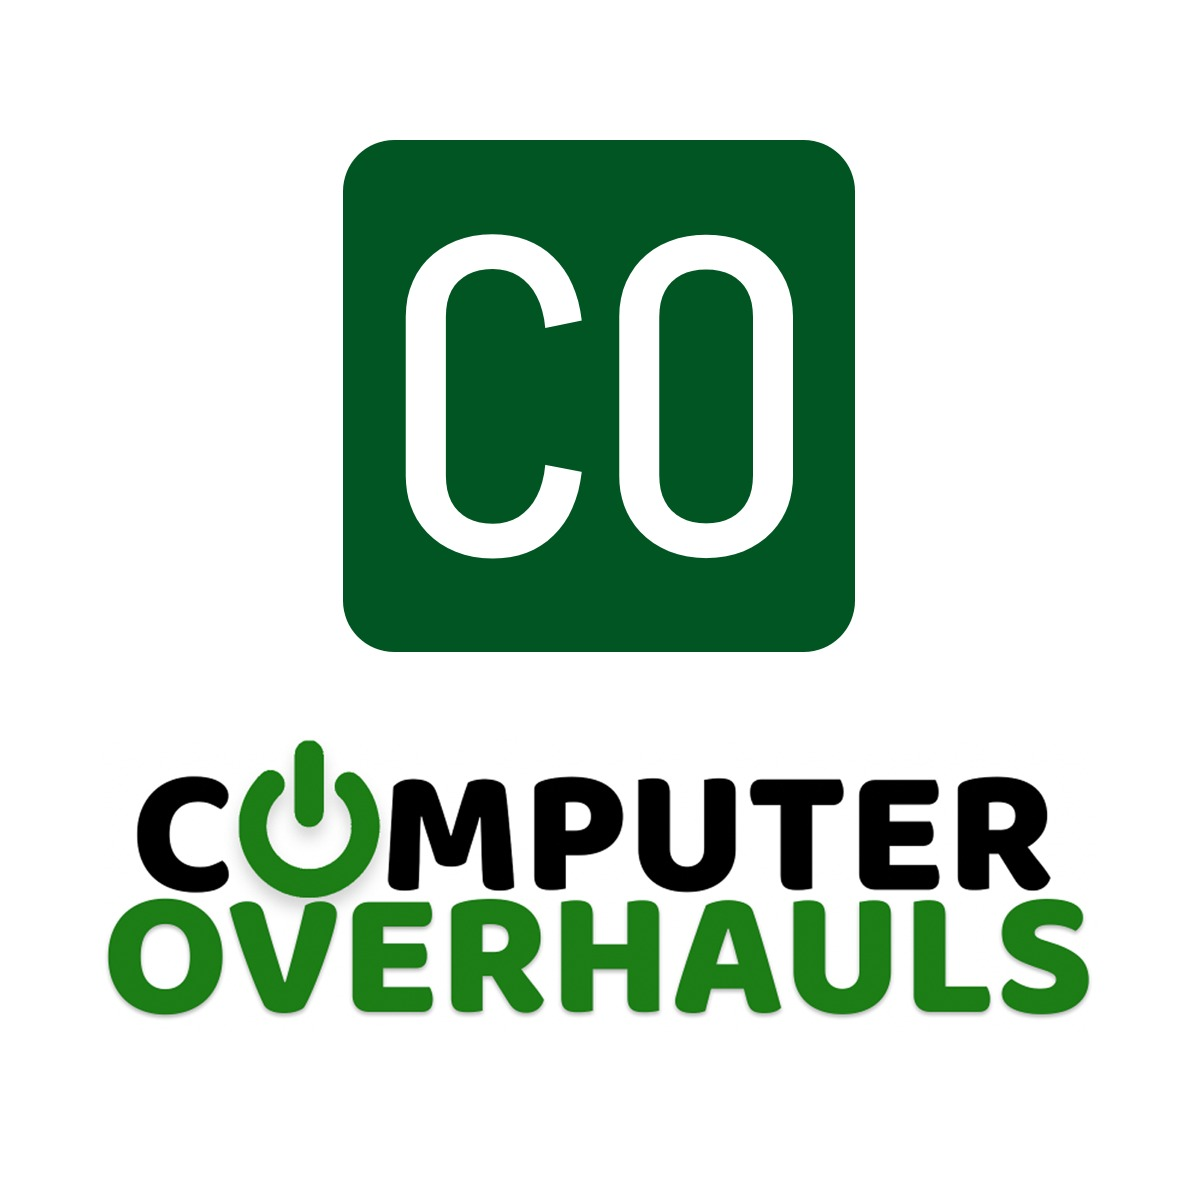 Computer Overhauls - New York, NY 10001 - (212)216-9711 | ShowMeLocal.com